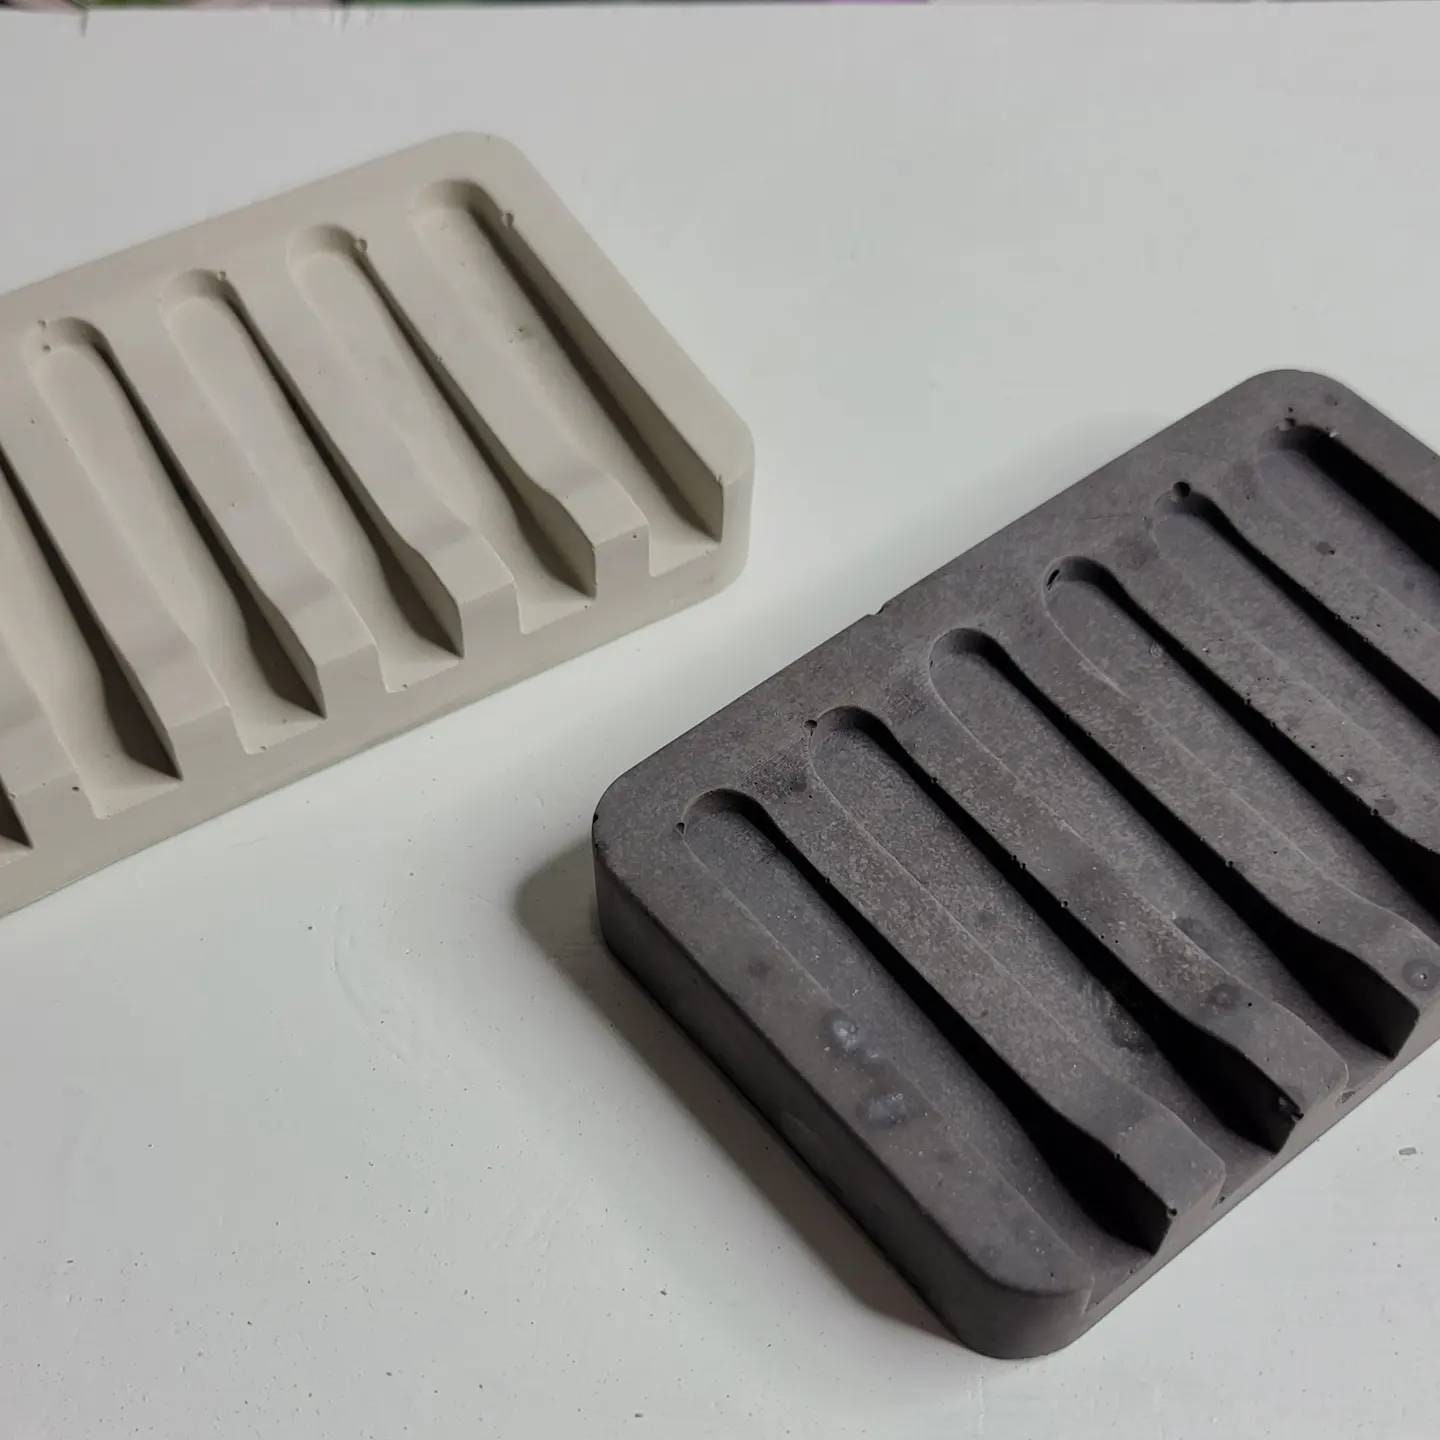 Soap Dish / Sponge Holder – Wood and Stone Designs